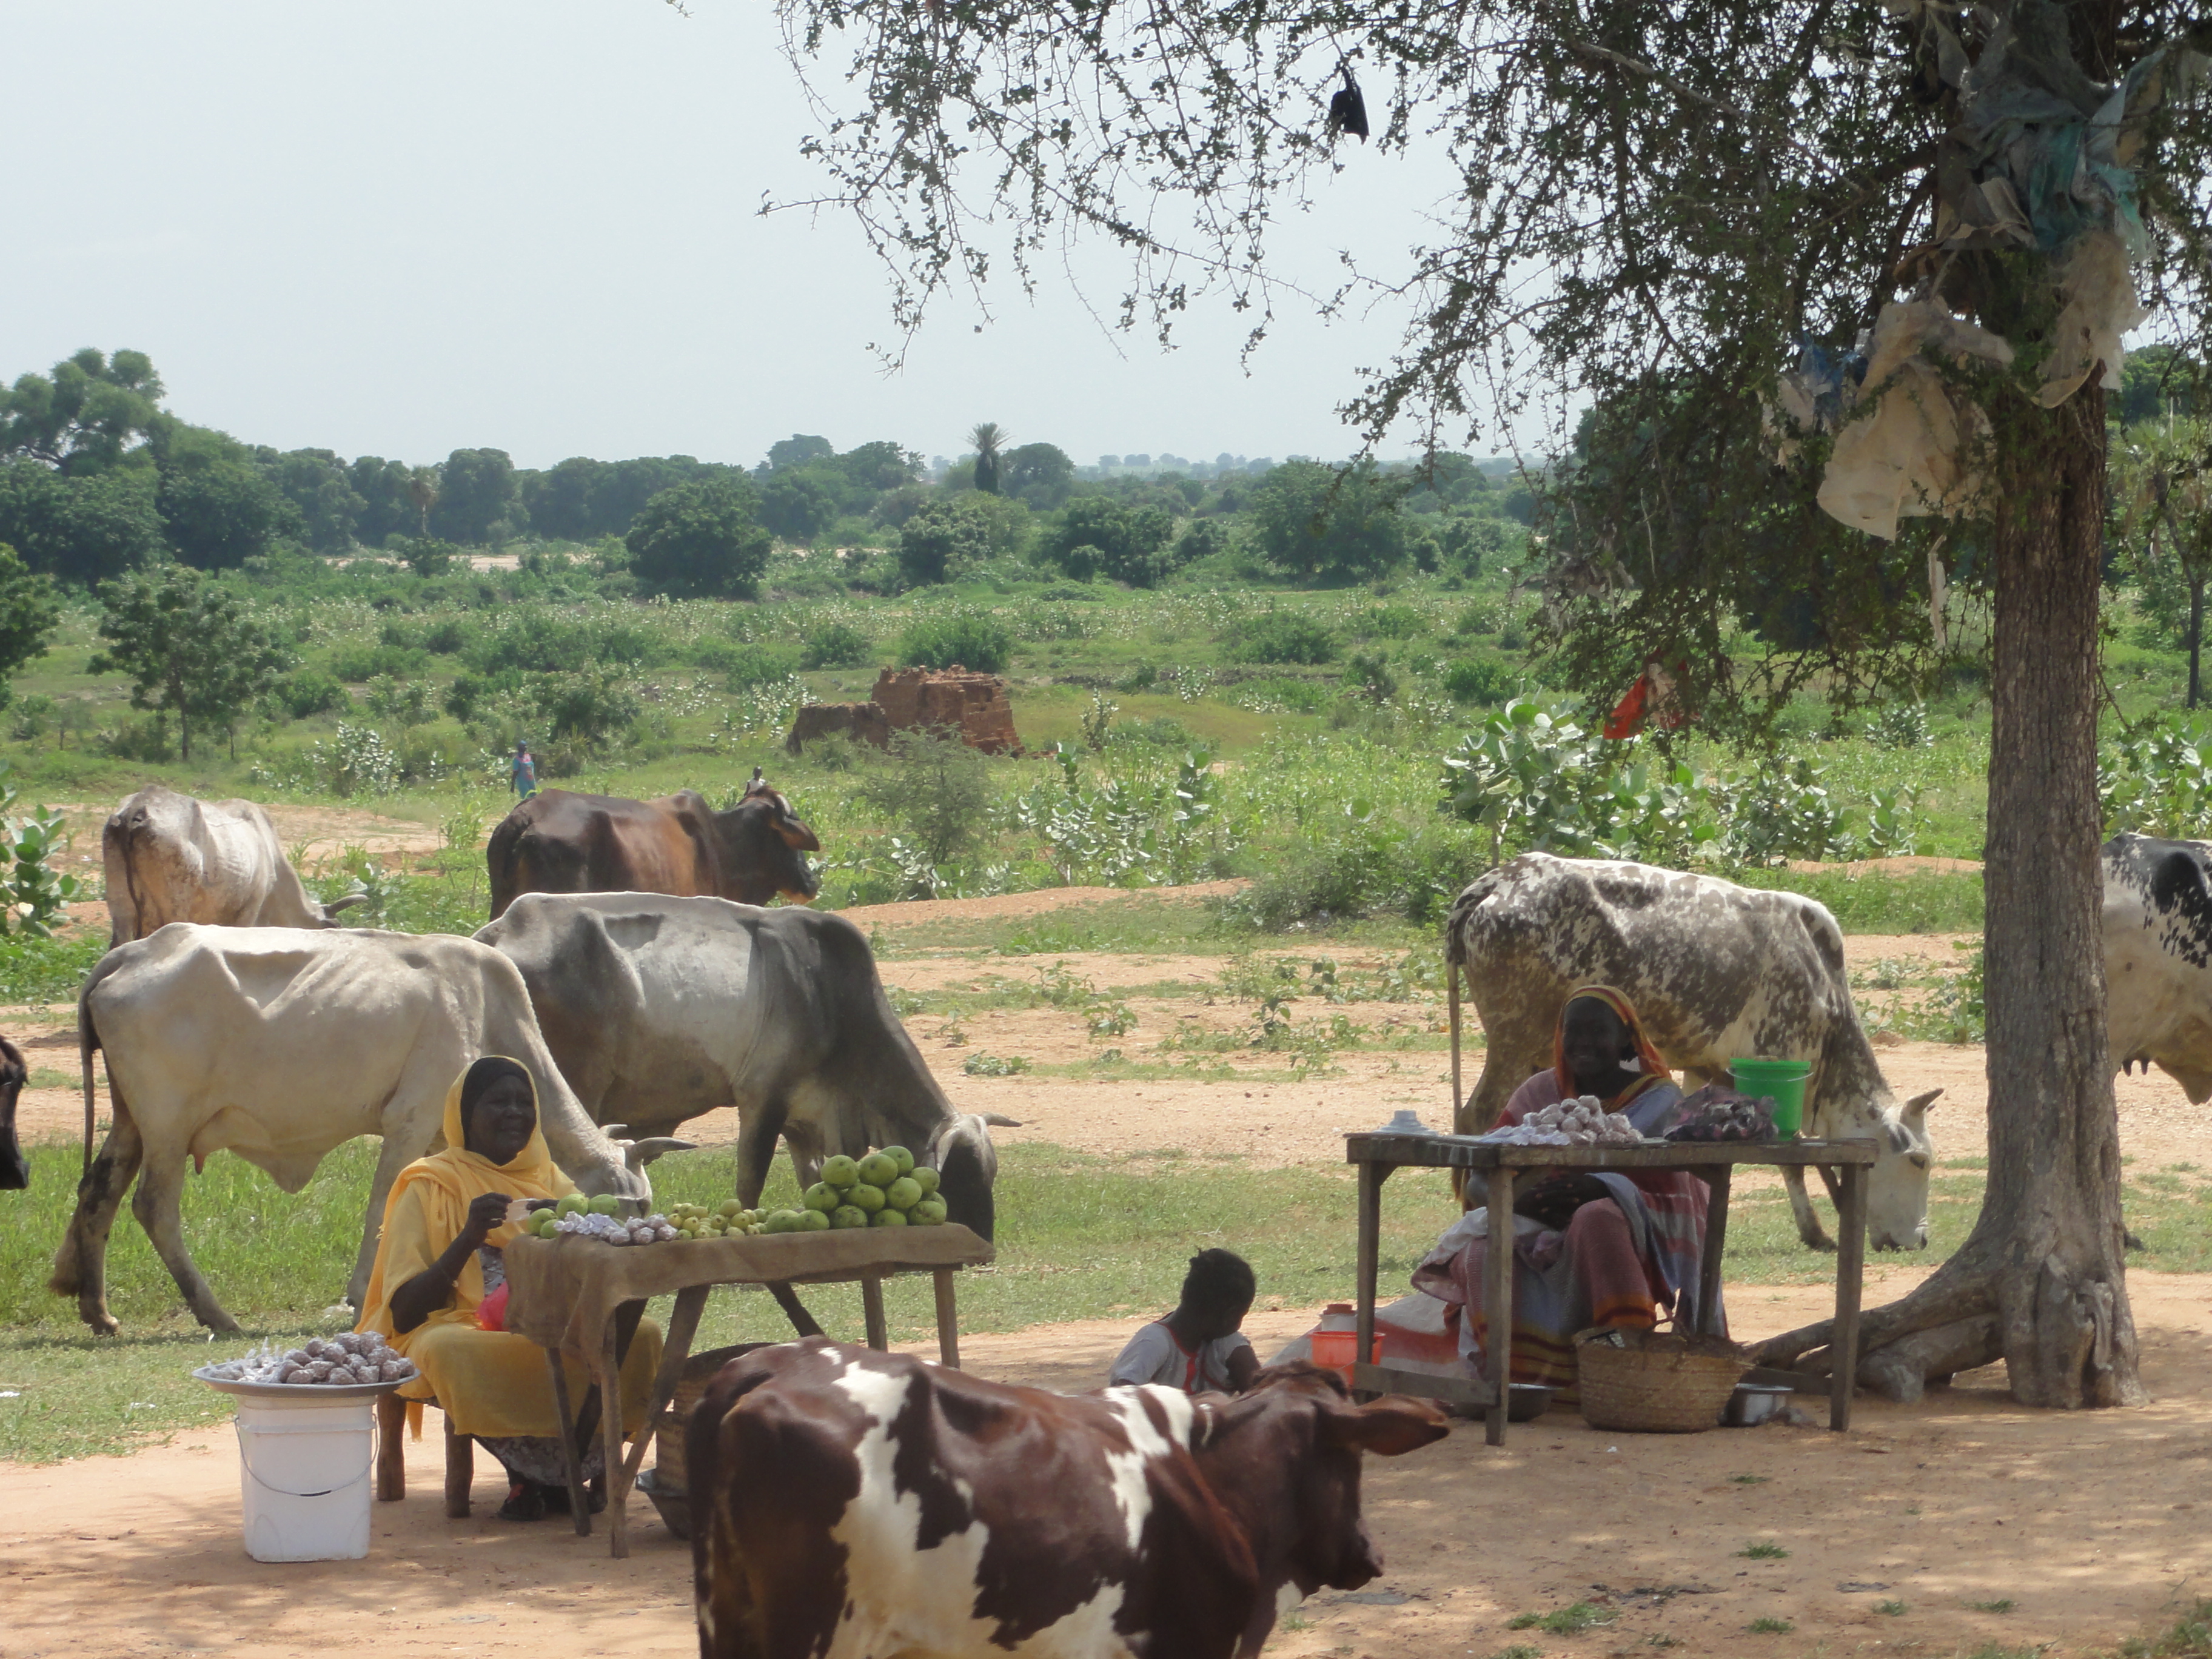 Rural scene in Darfur, Sudan.